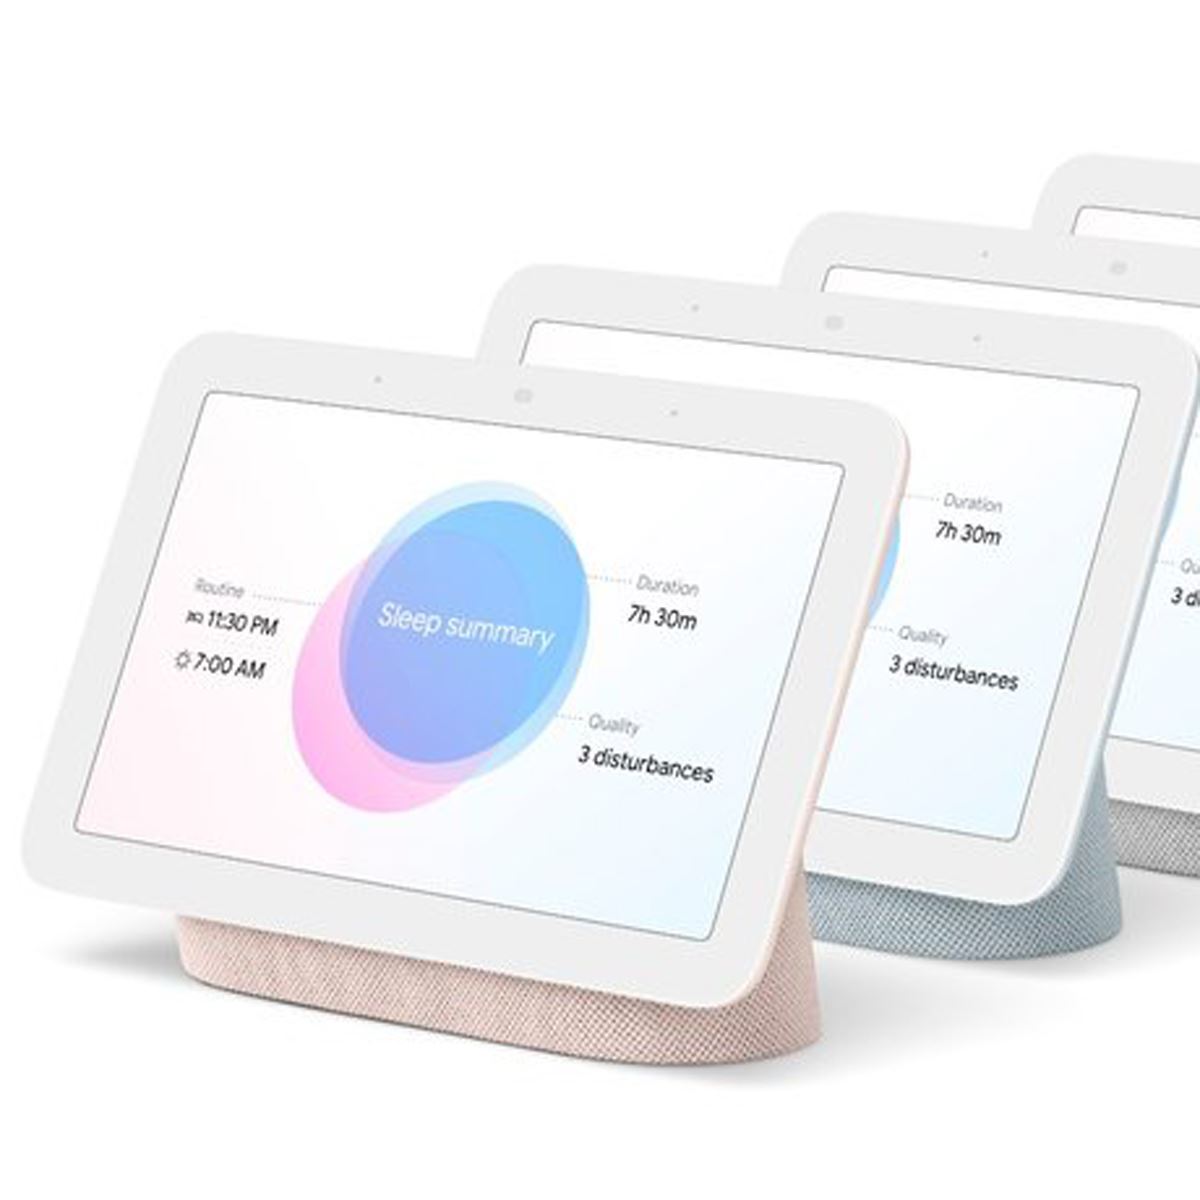 Googleが第2世代スマートディスプレイ「Nest Hub」を発表 - 価格 